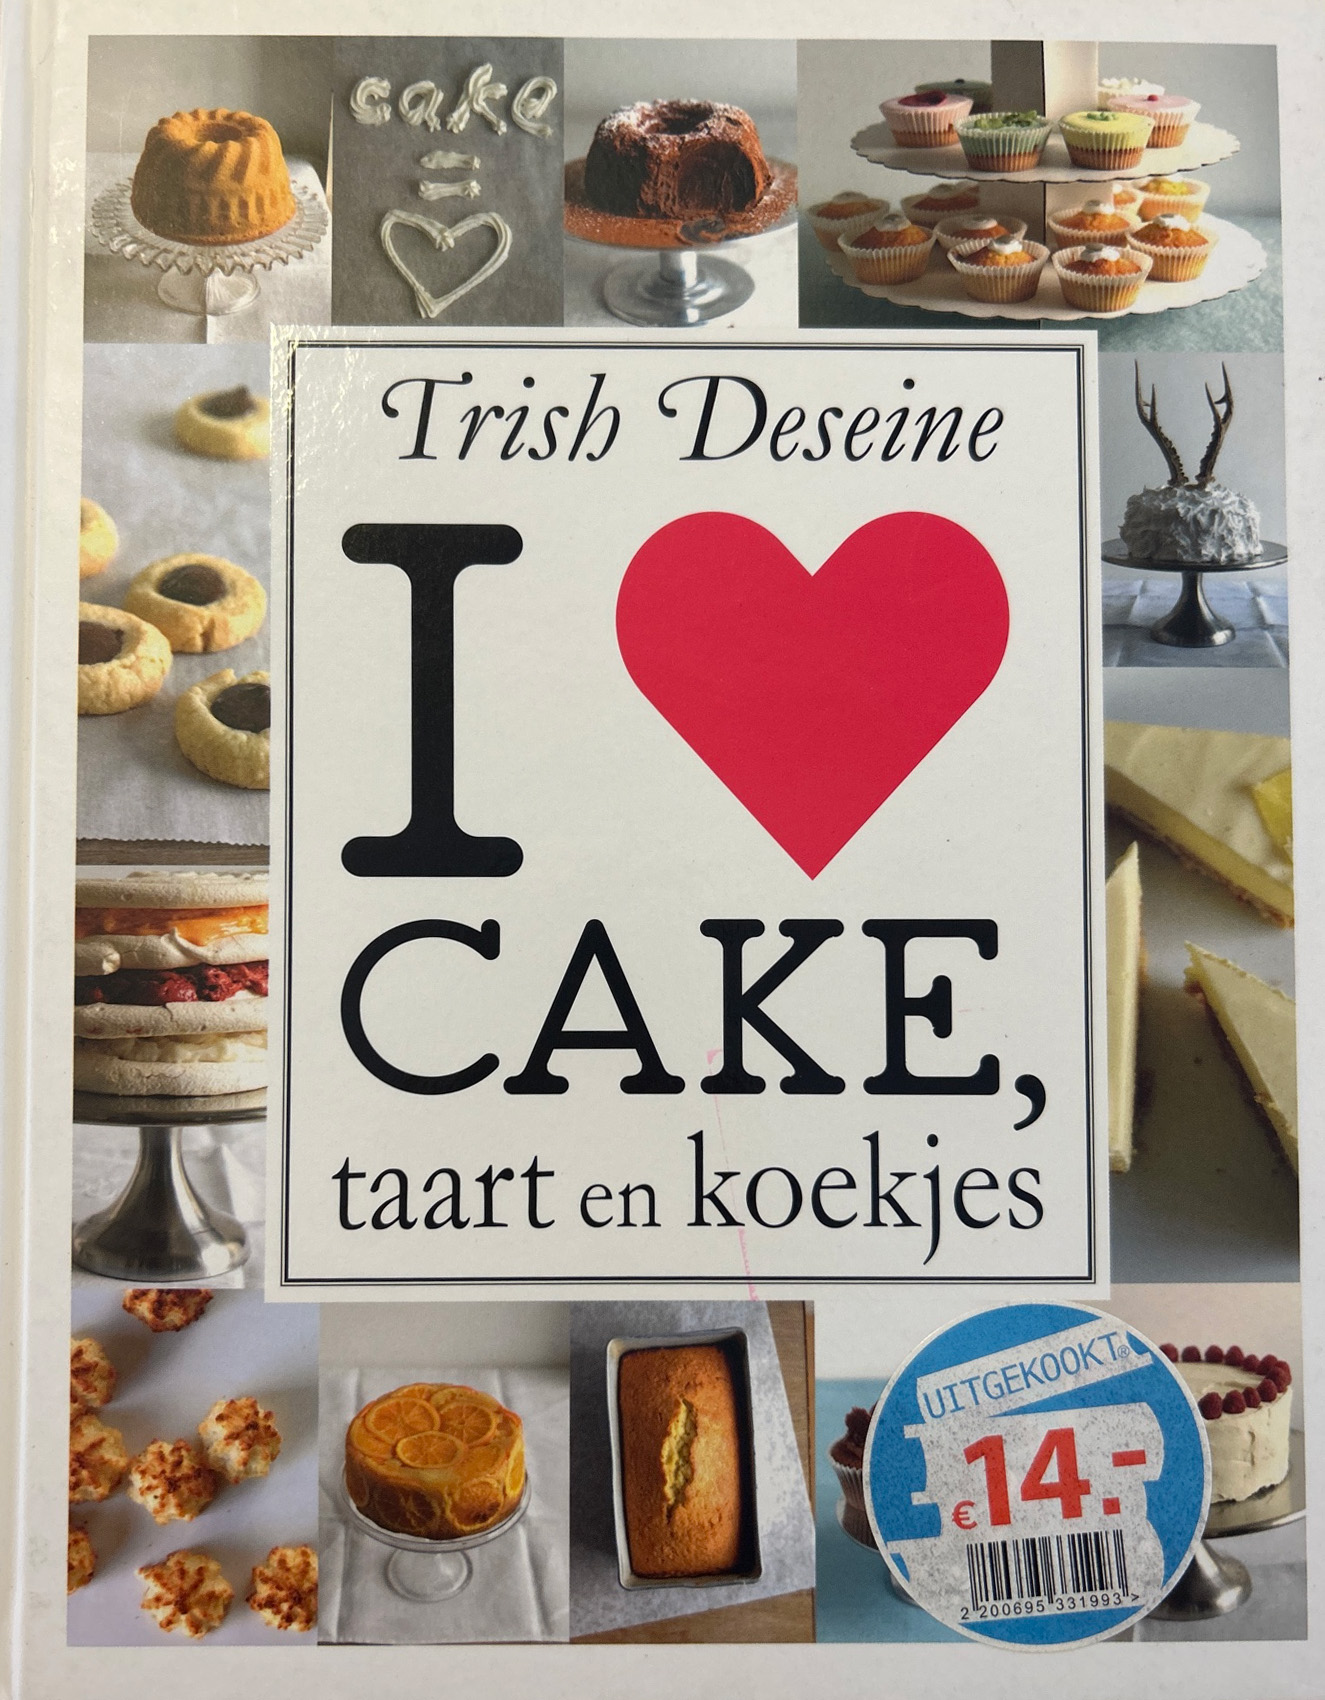 I Love Cake, taart en koekjes – Irish Deseine